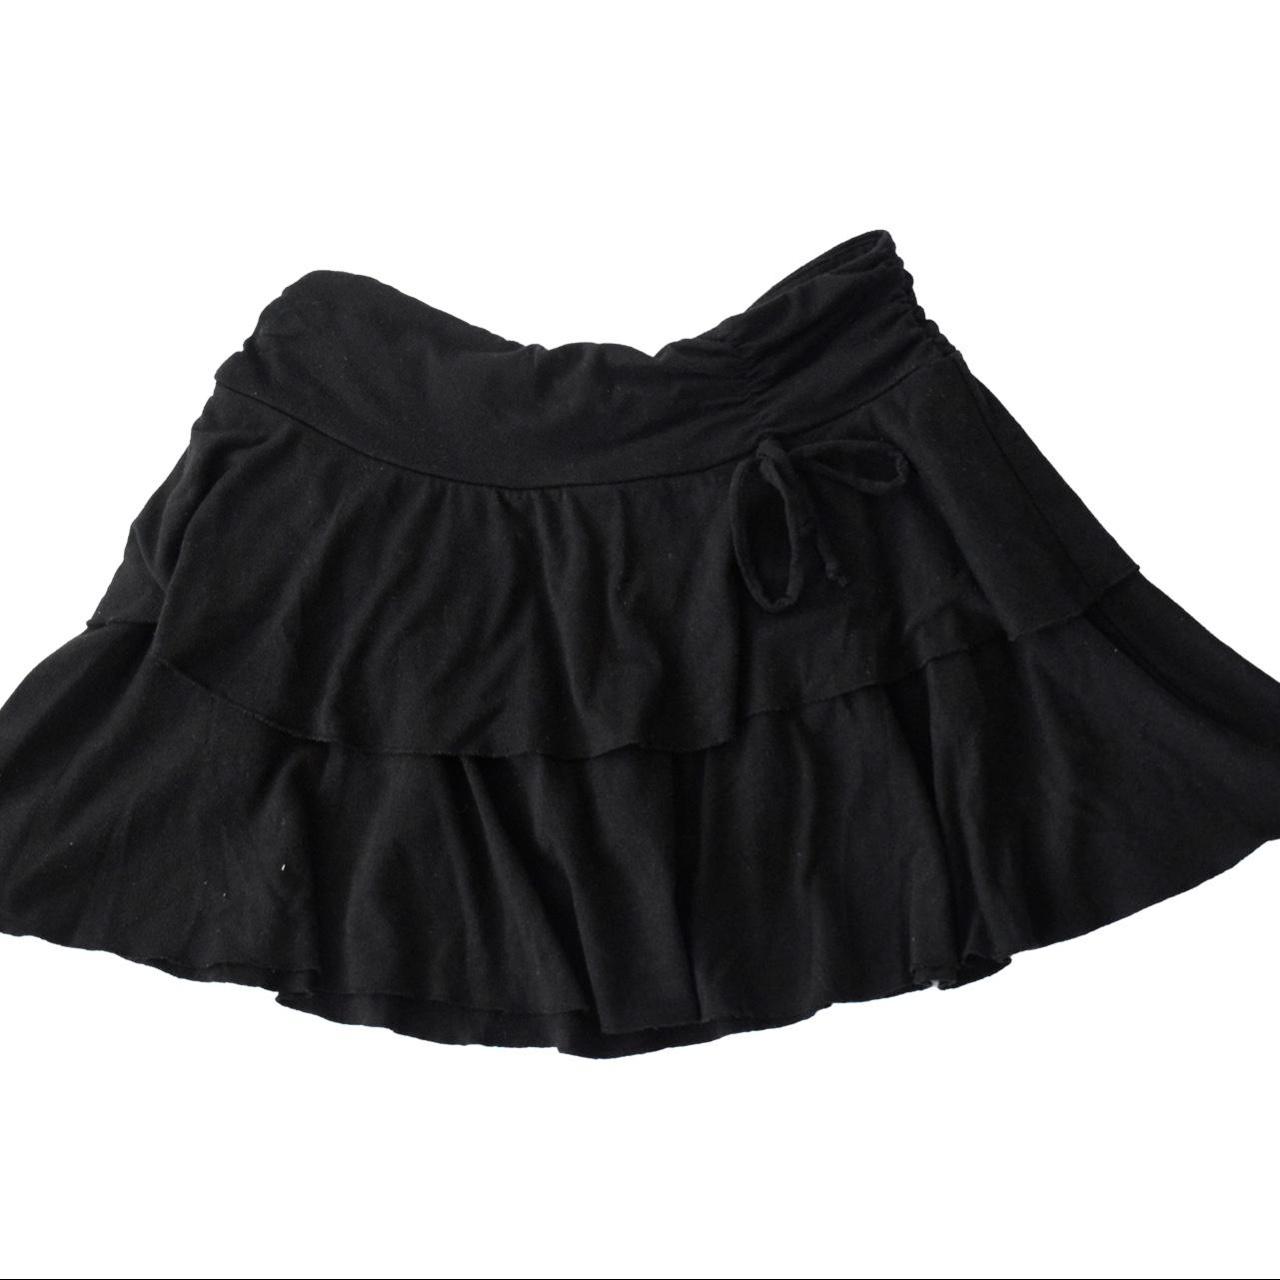 Stretchy Black Mini Skirt size small - Depop